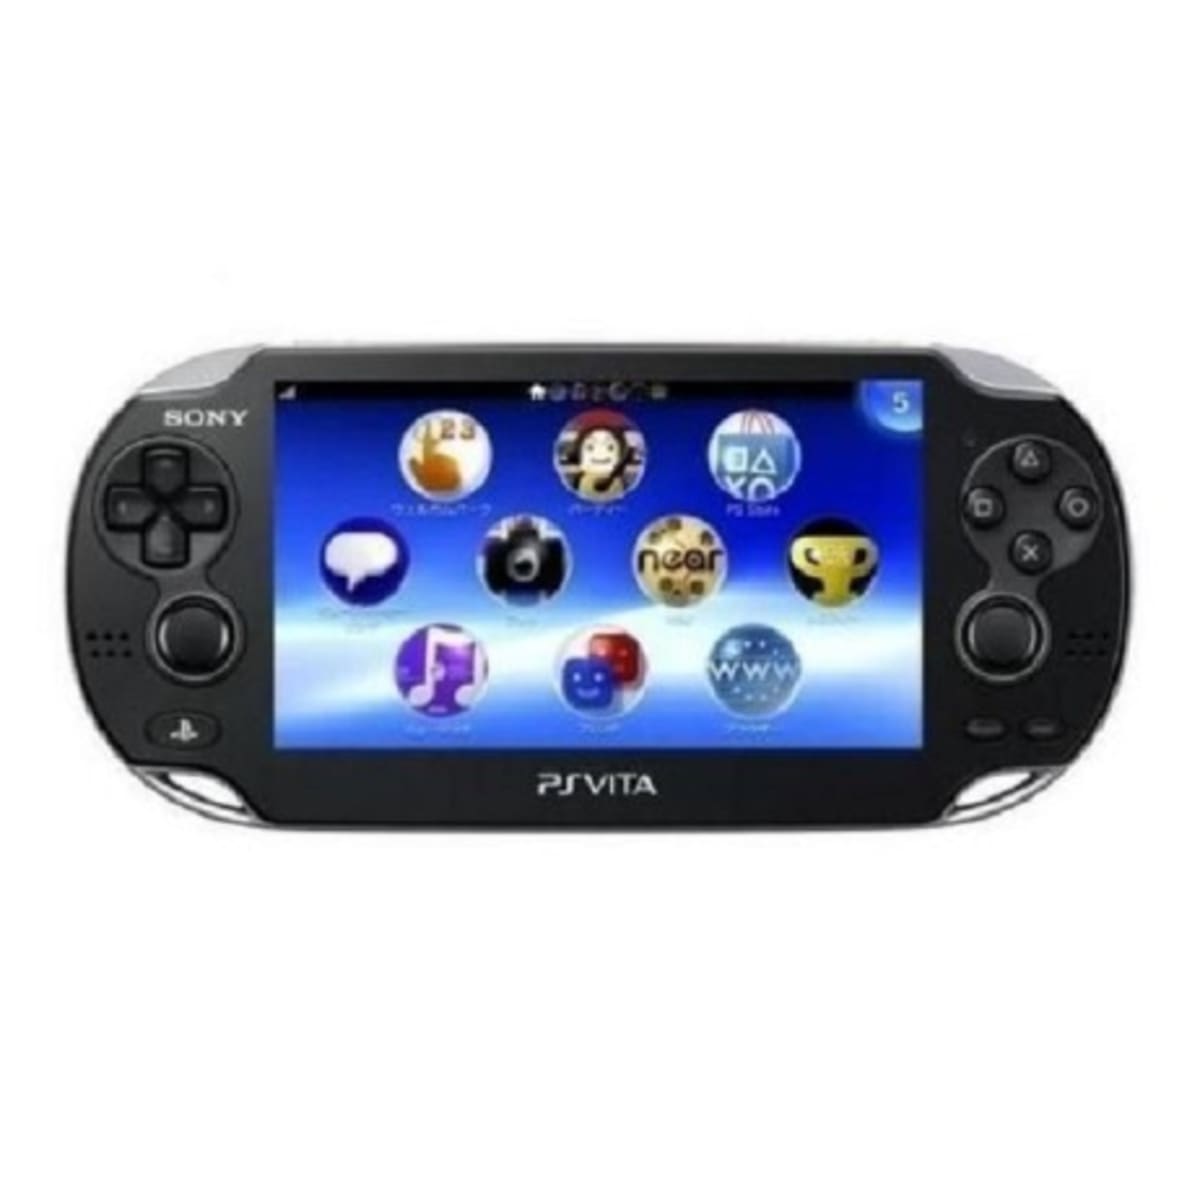 Sony Ps Vita - Portable Playstation